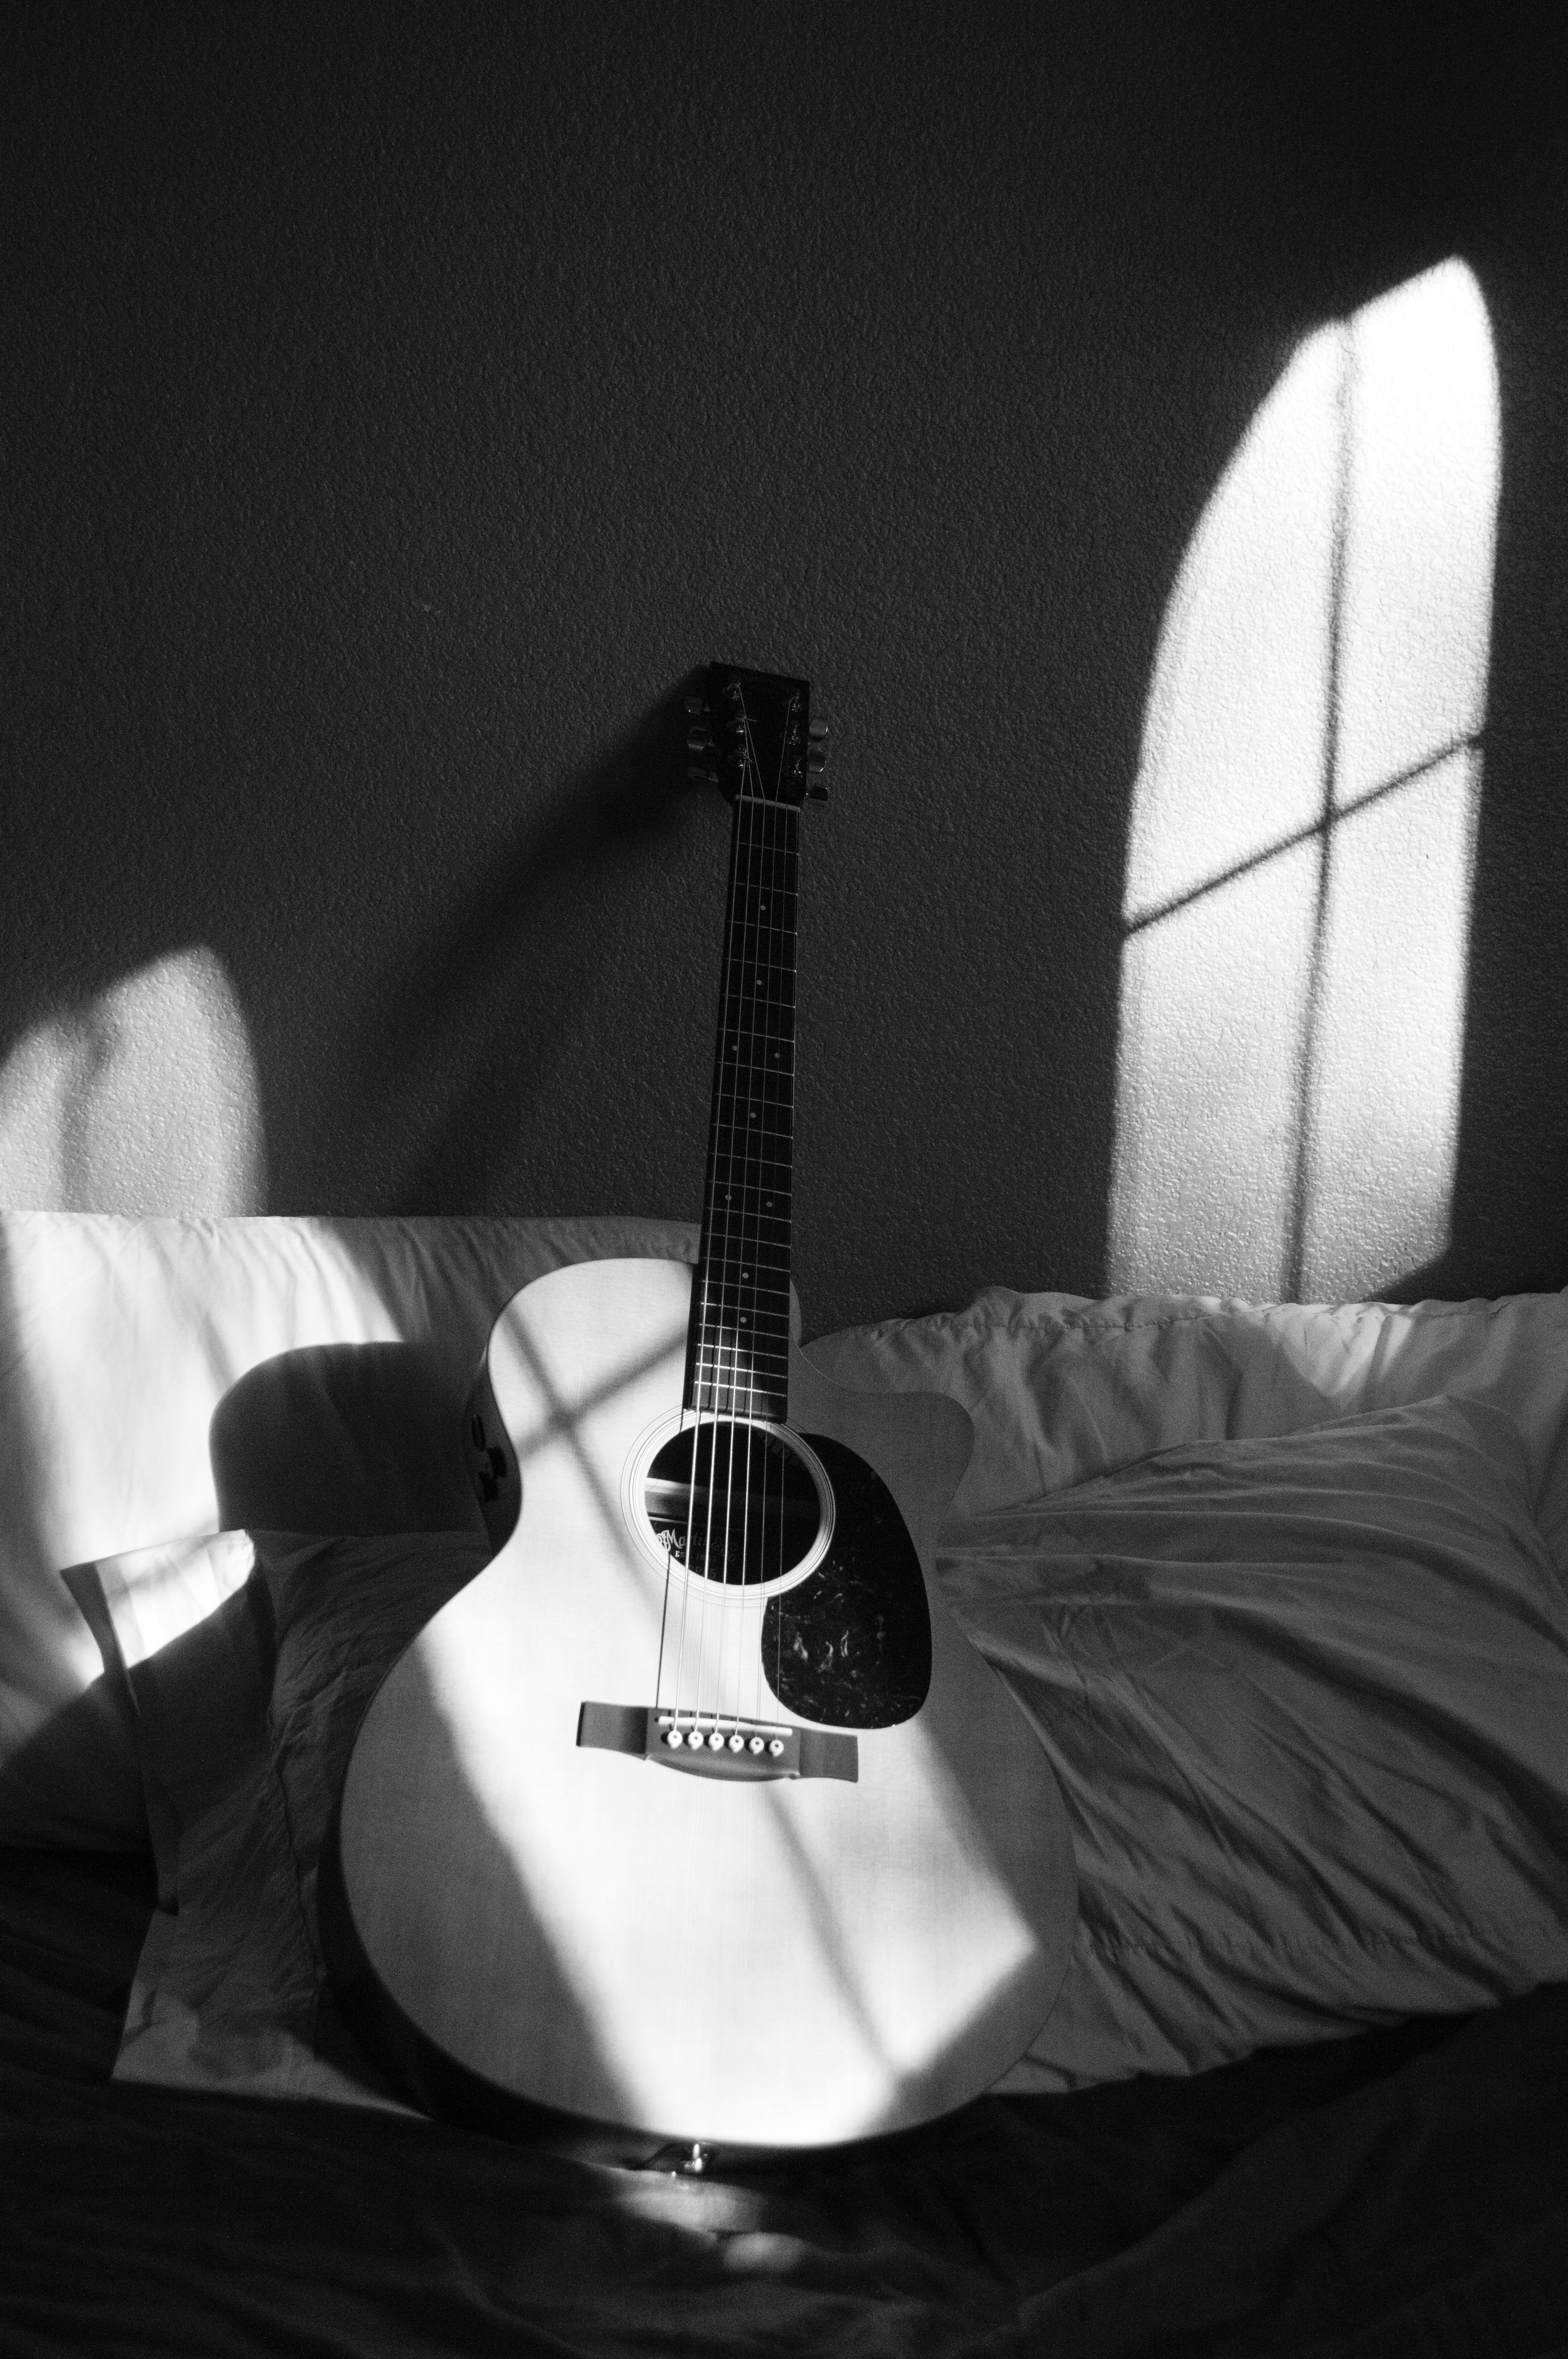 White Acoustic Guitar on Grey and White Textile · Free Stock Photo